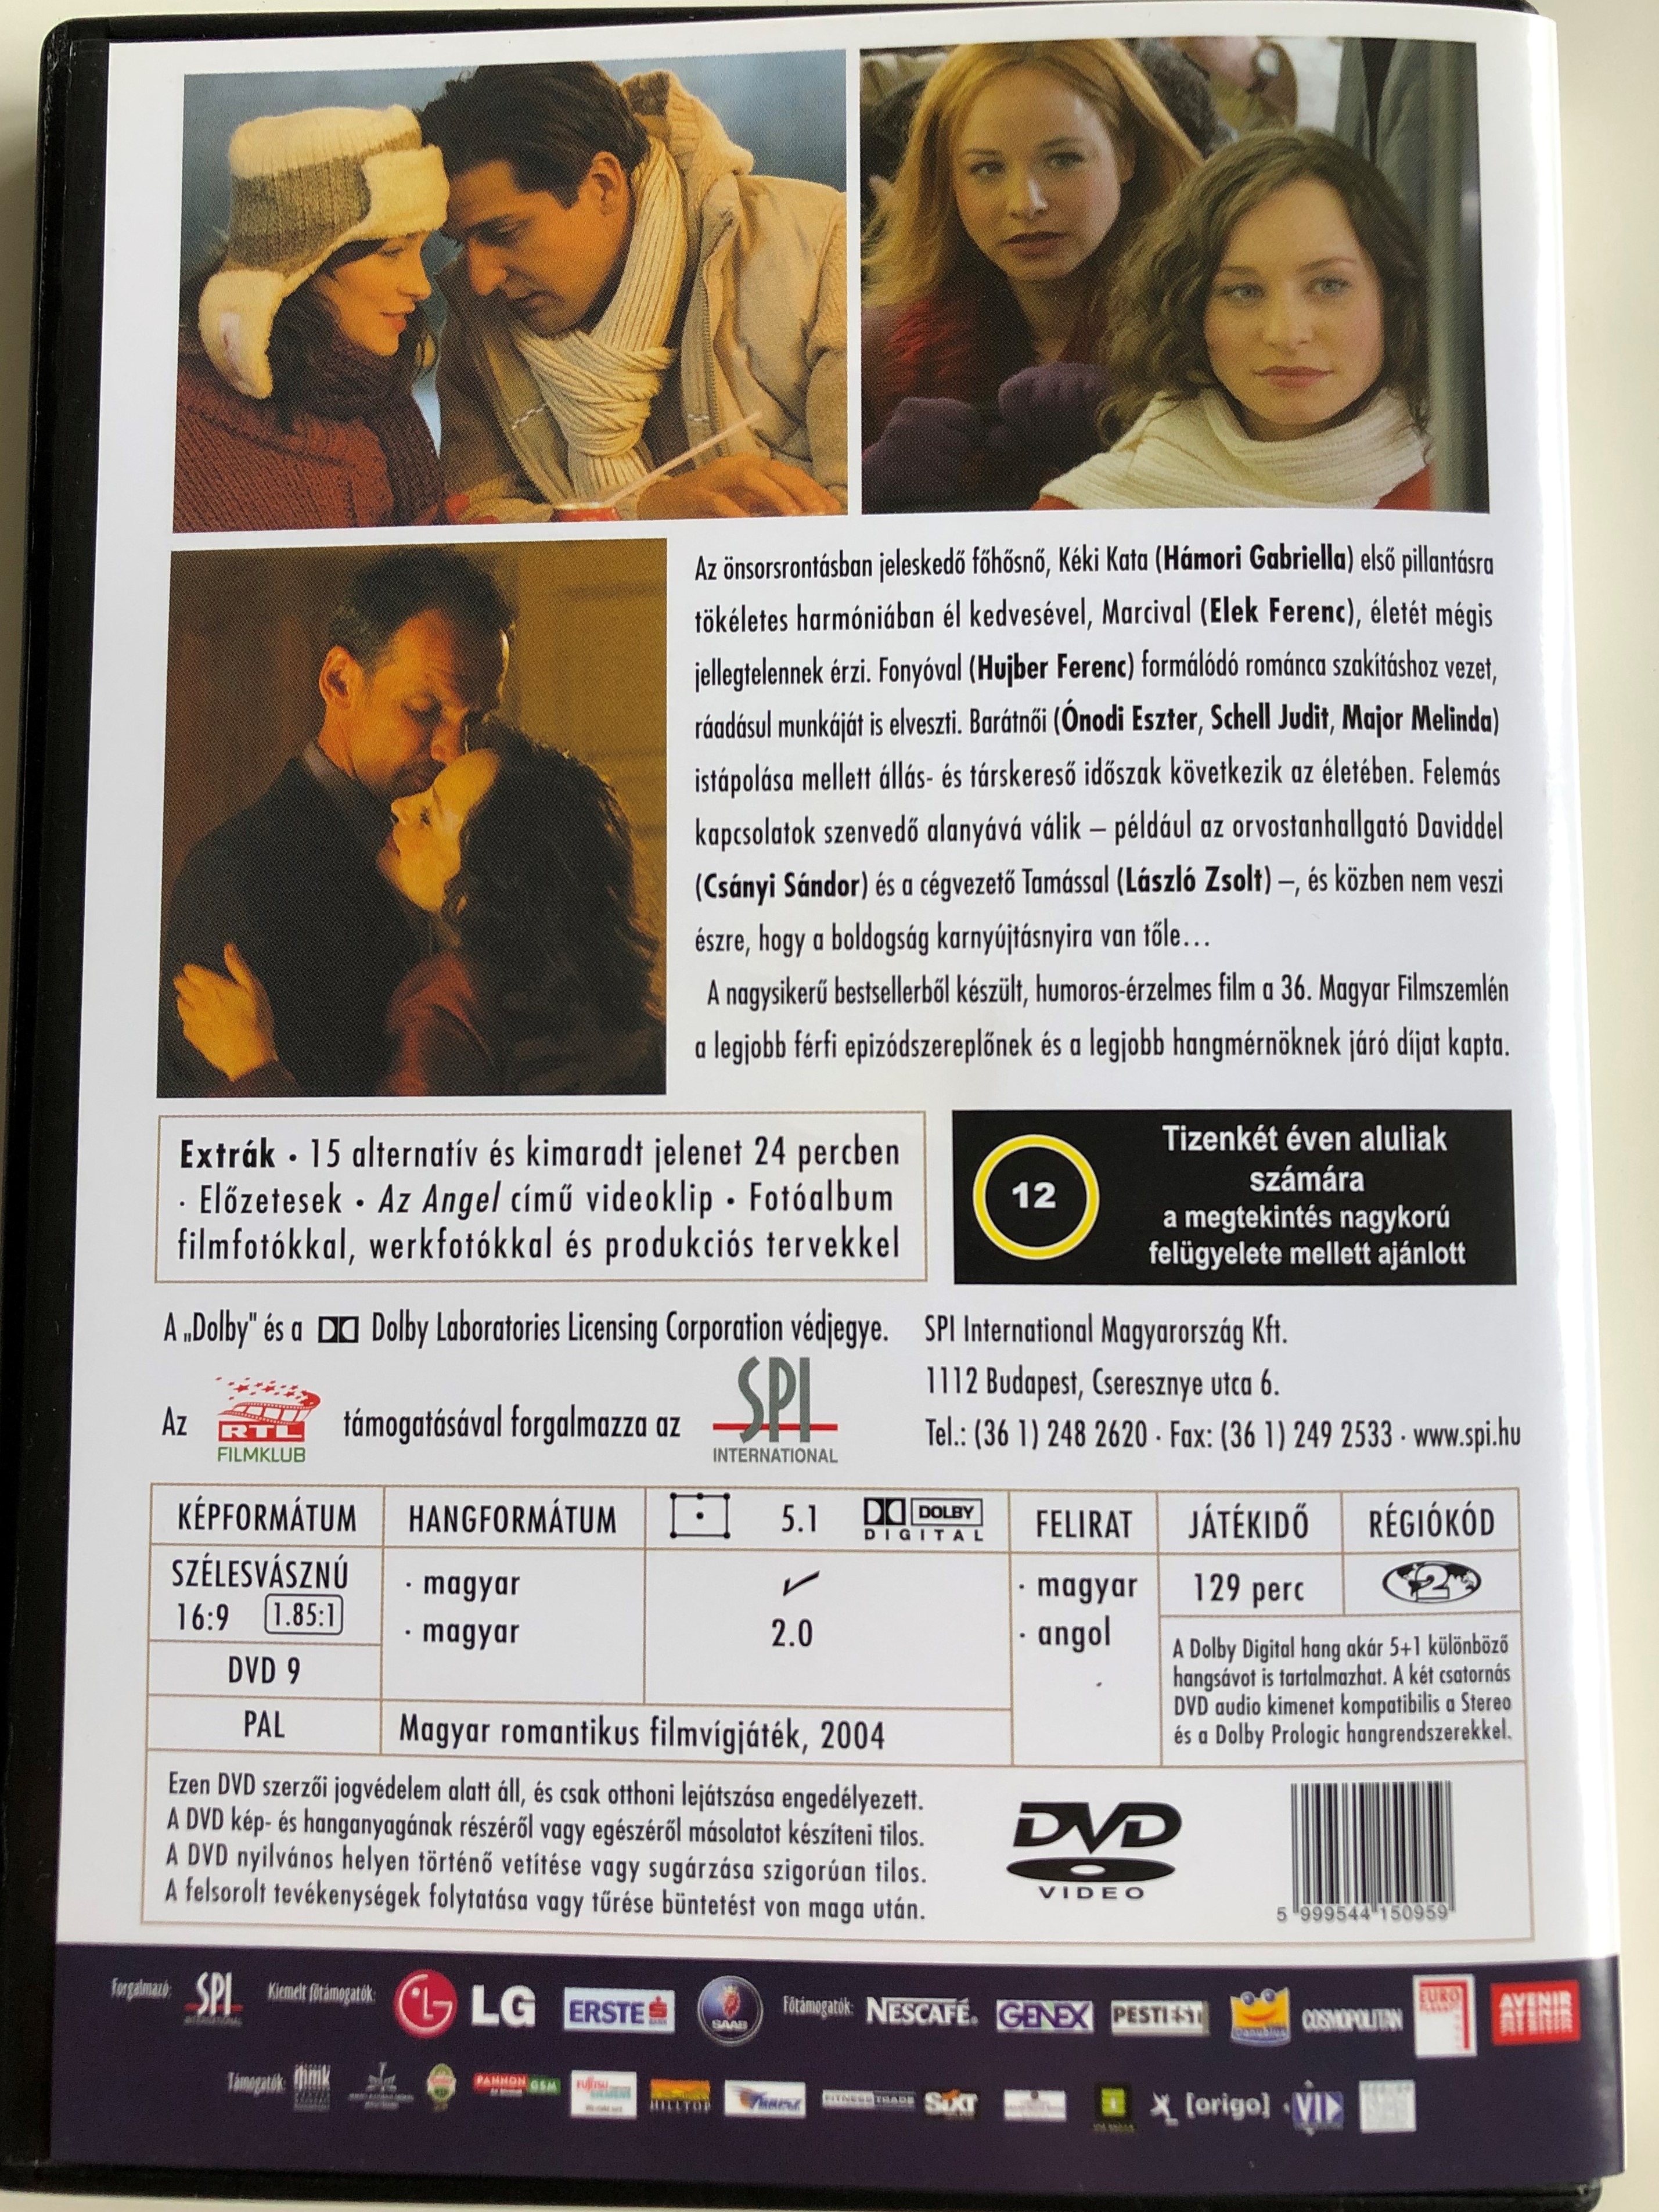 ll-ts-tok-meg-ter-zanyut-dvd-2004-directed-by-bergendy-p-ter-starring-h-mori-gabriella-cs-nyi-s-ndor-nodi-eszter-l-zsl-zsolt-schell-judit-nagy-ervin-hungarian-romantic-comedy-2-.jpg